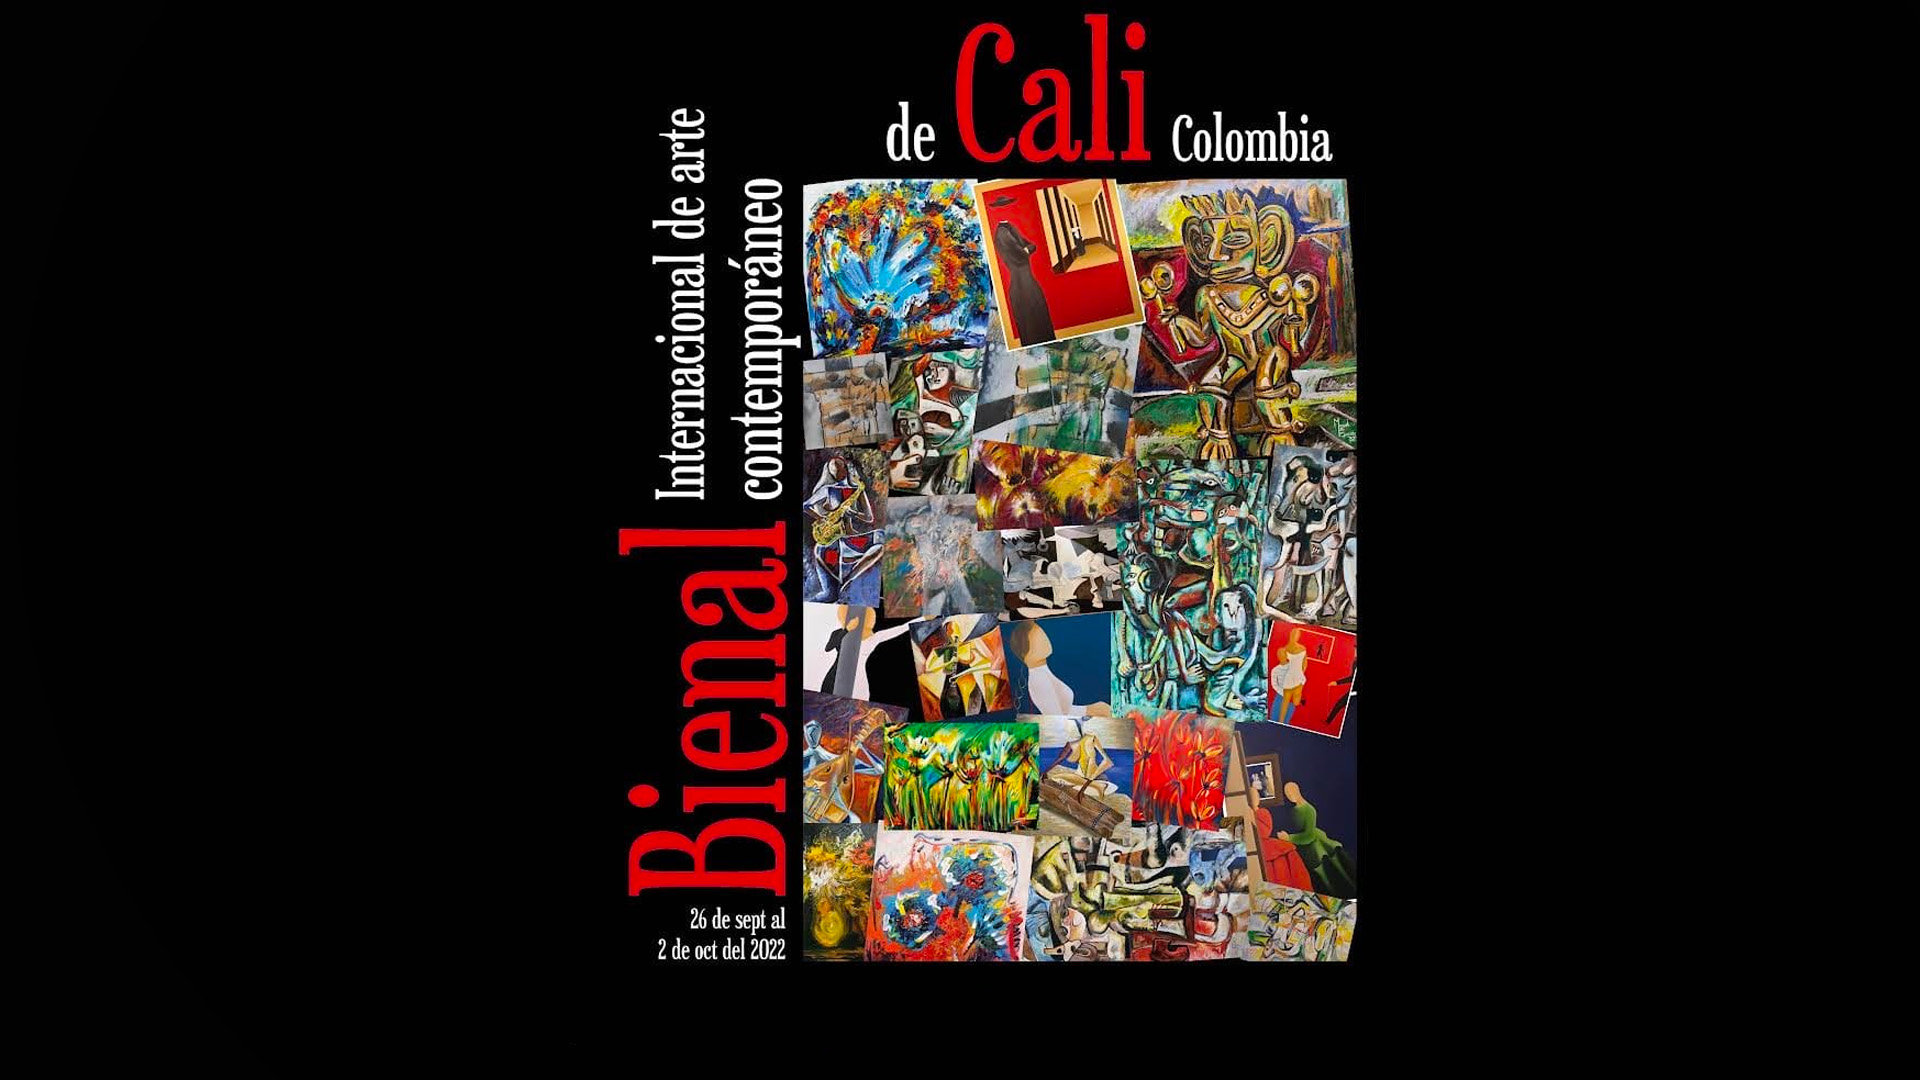 Bienal Internacional de Arte Contemporáneo de Cali